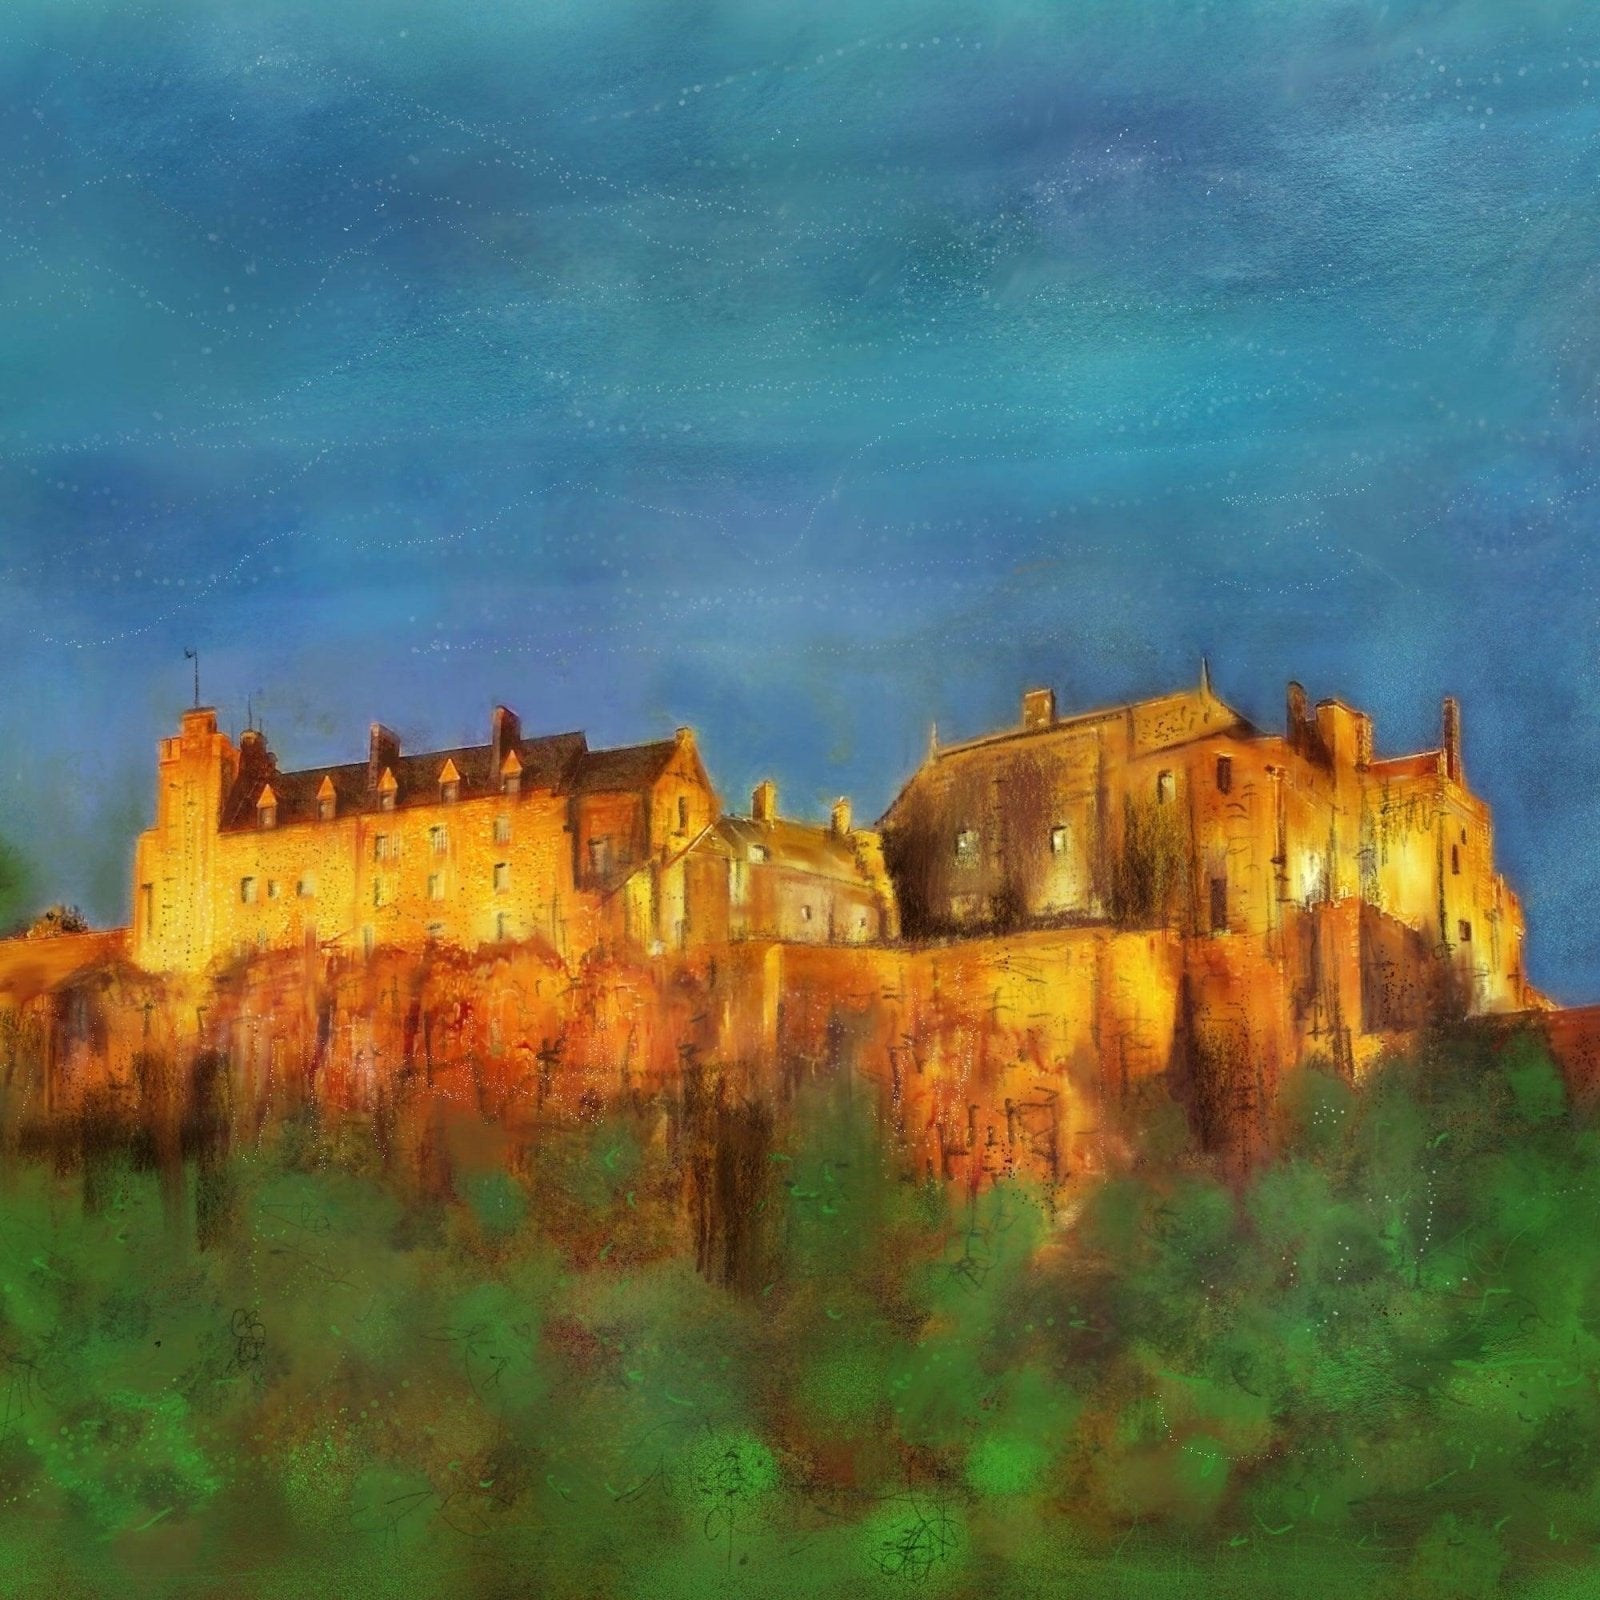 Stirling Castle Sunset Wooden Art Block-Wooden Art Blocks-Scottish Castles Art Gallery-Paintings, Prints, Homeware, Art Gifts From Scotland By Scottish Artist Kevin Hunter